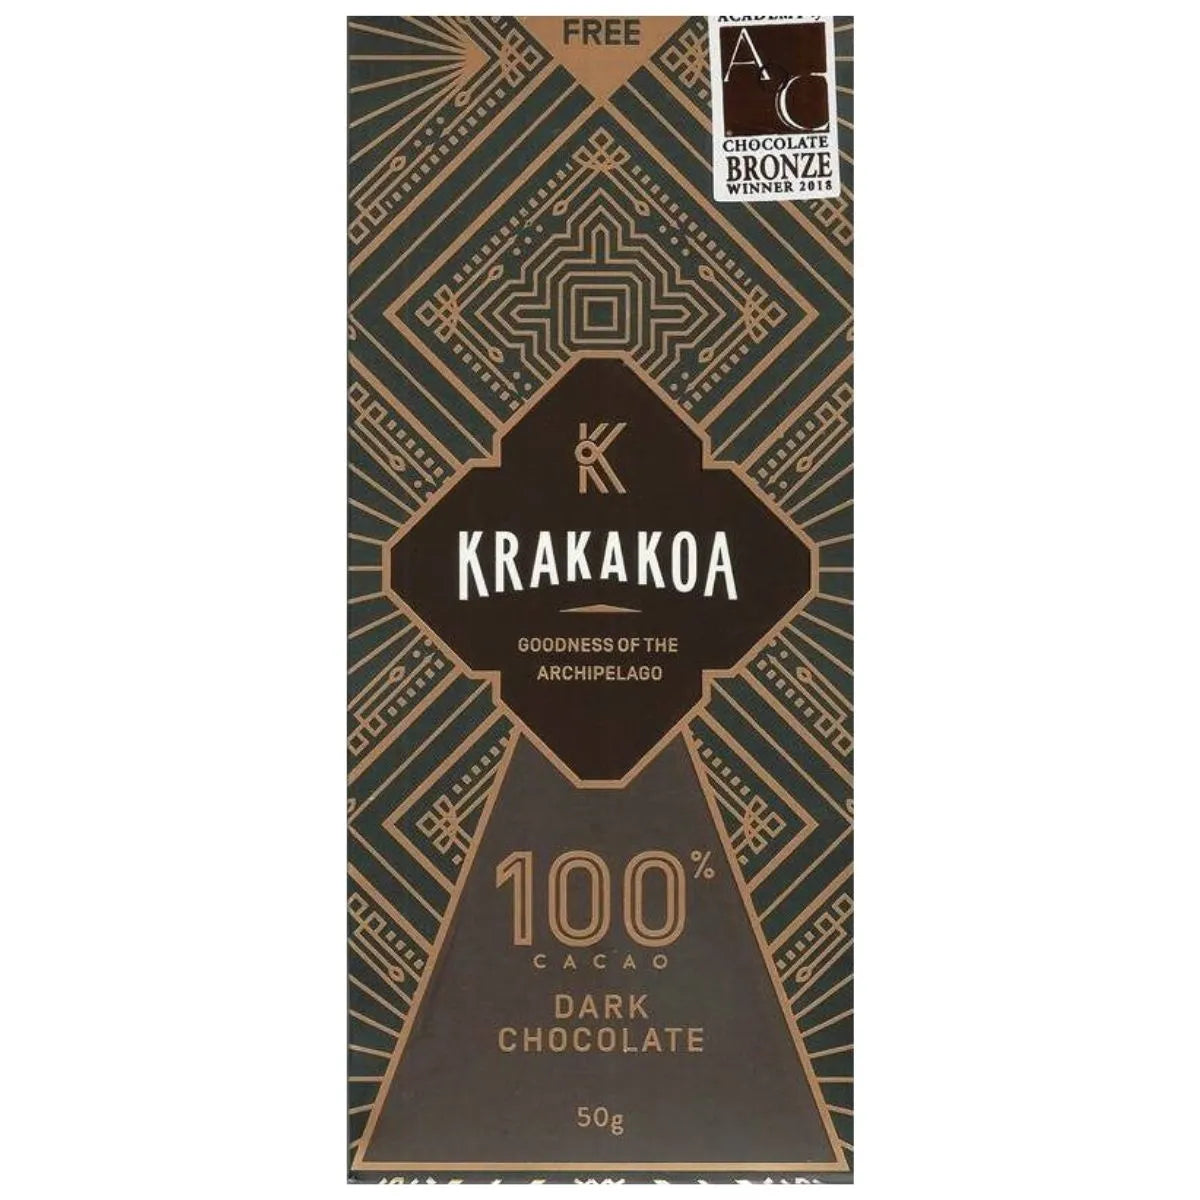 krakakoa arenga indonesien 100 prozent dunkle schokolade